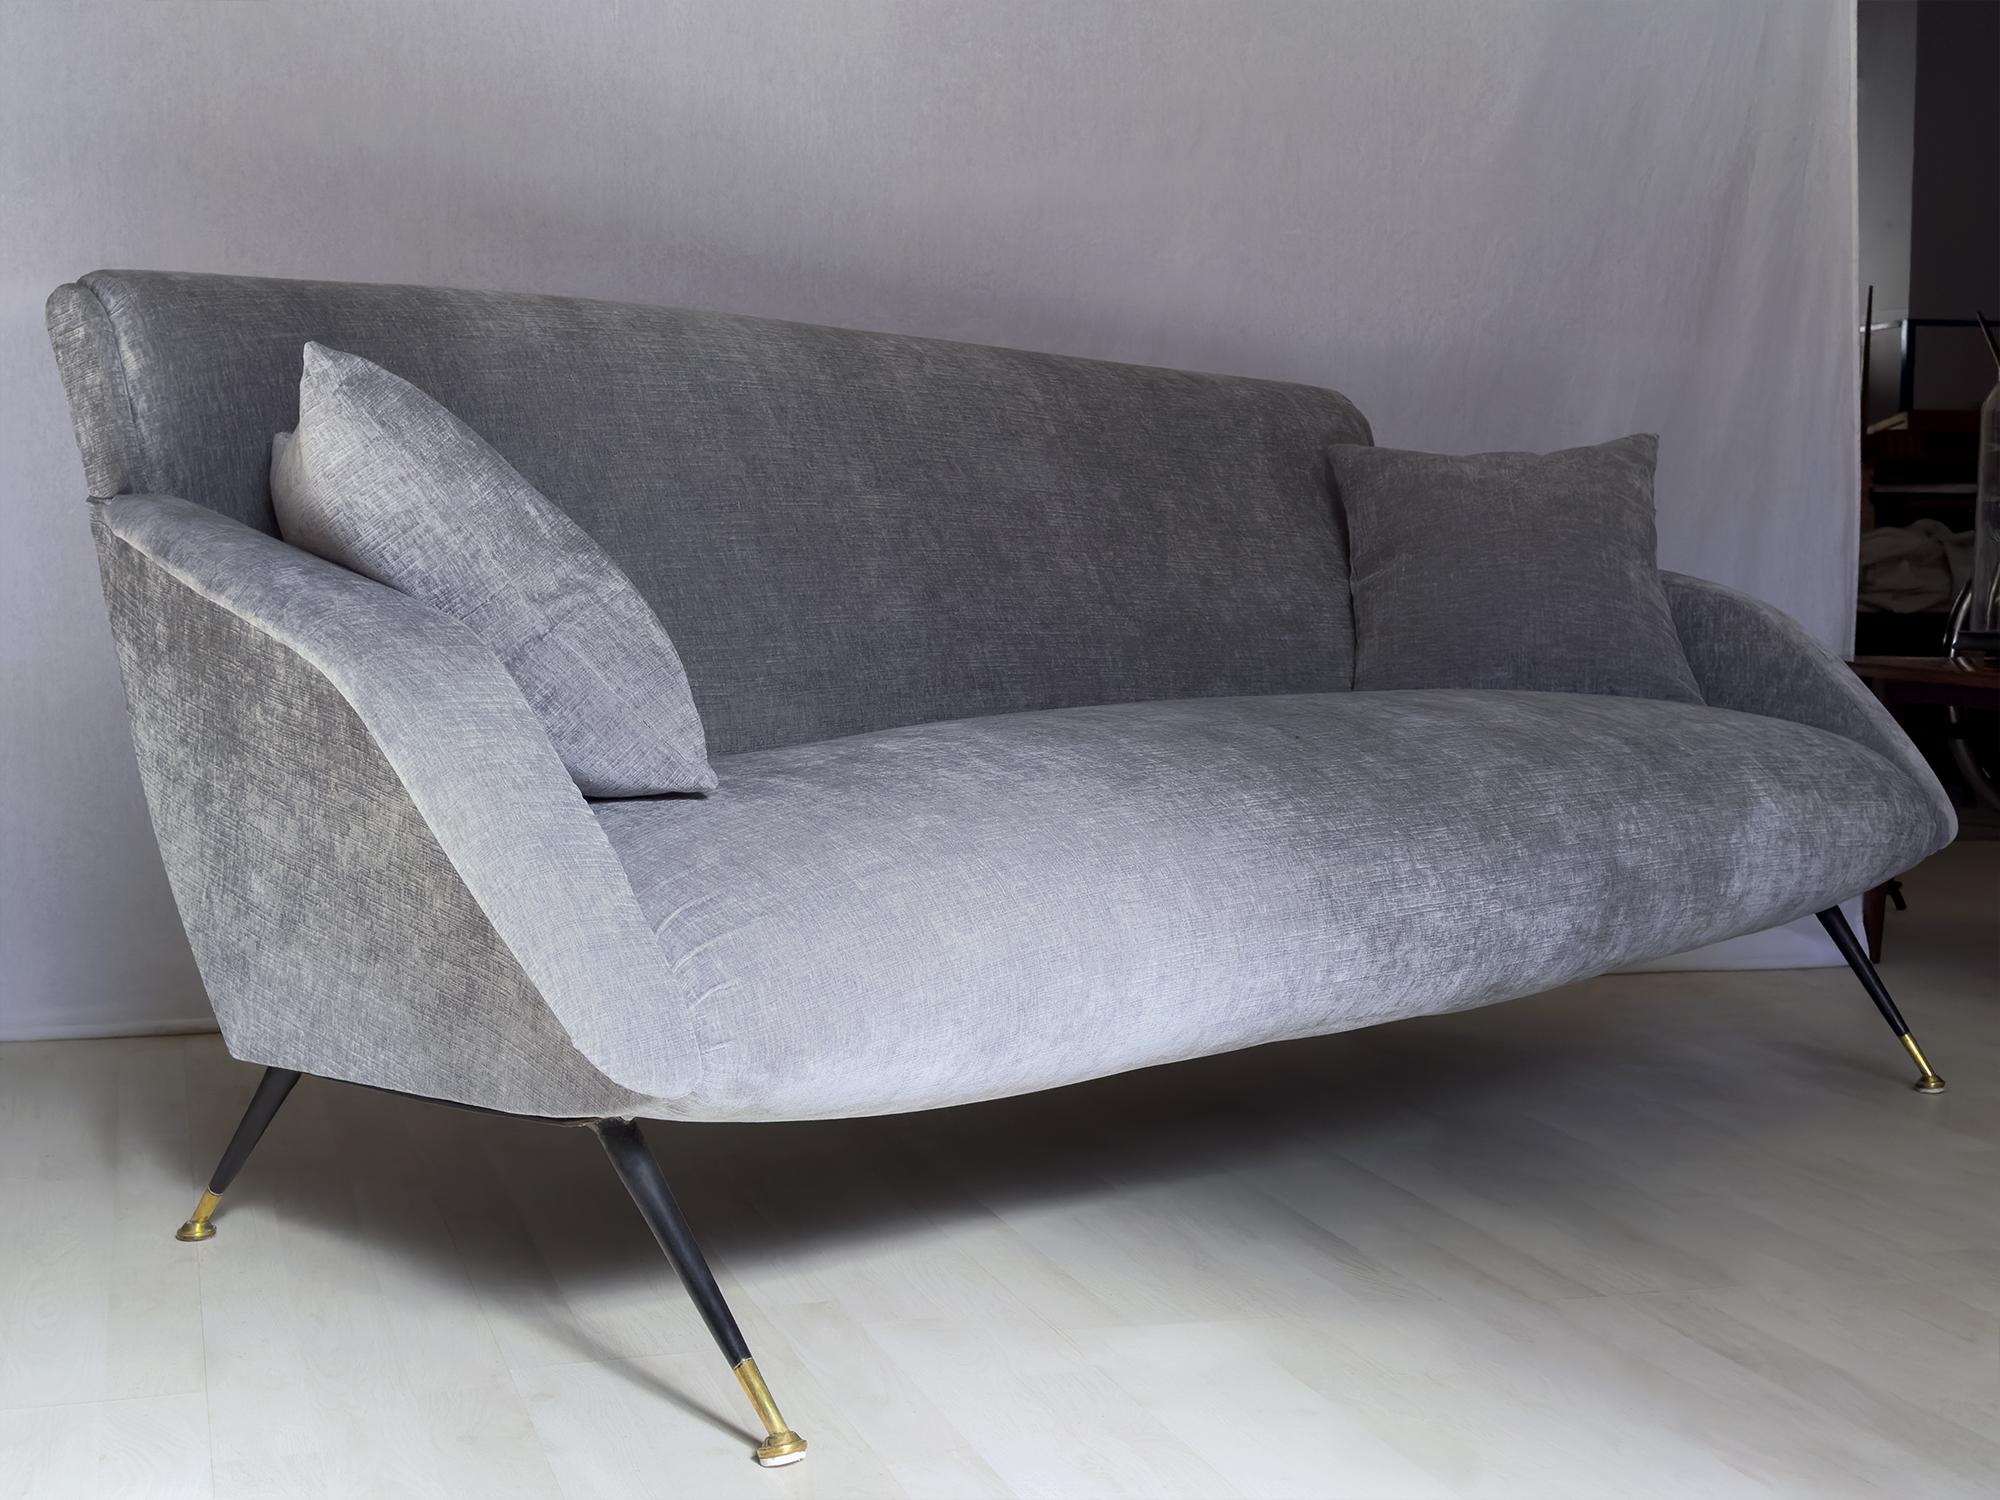 Mid-Century Modern Italian Midcentury Sofa 3-Seat in Grey-Blue Velvet, 1950s For Sale